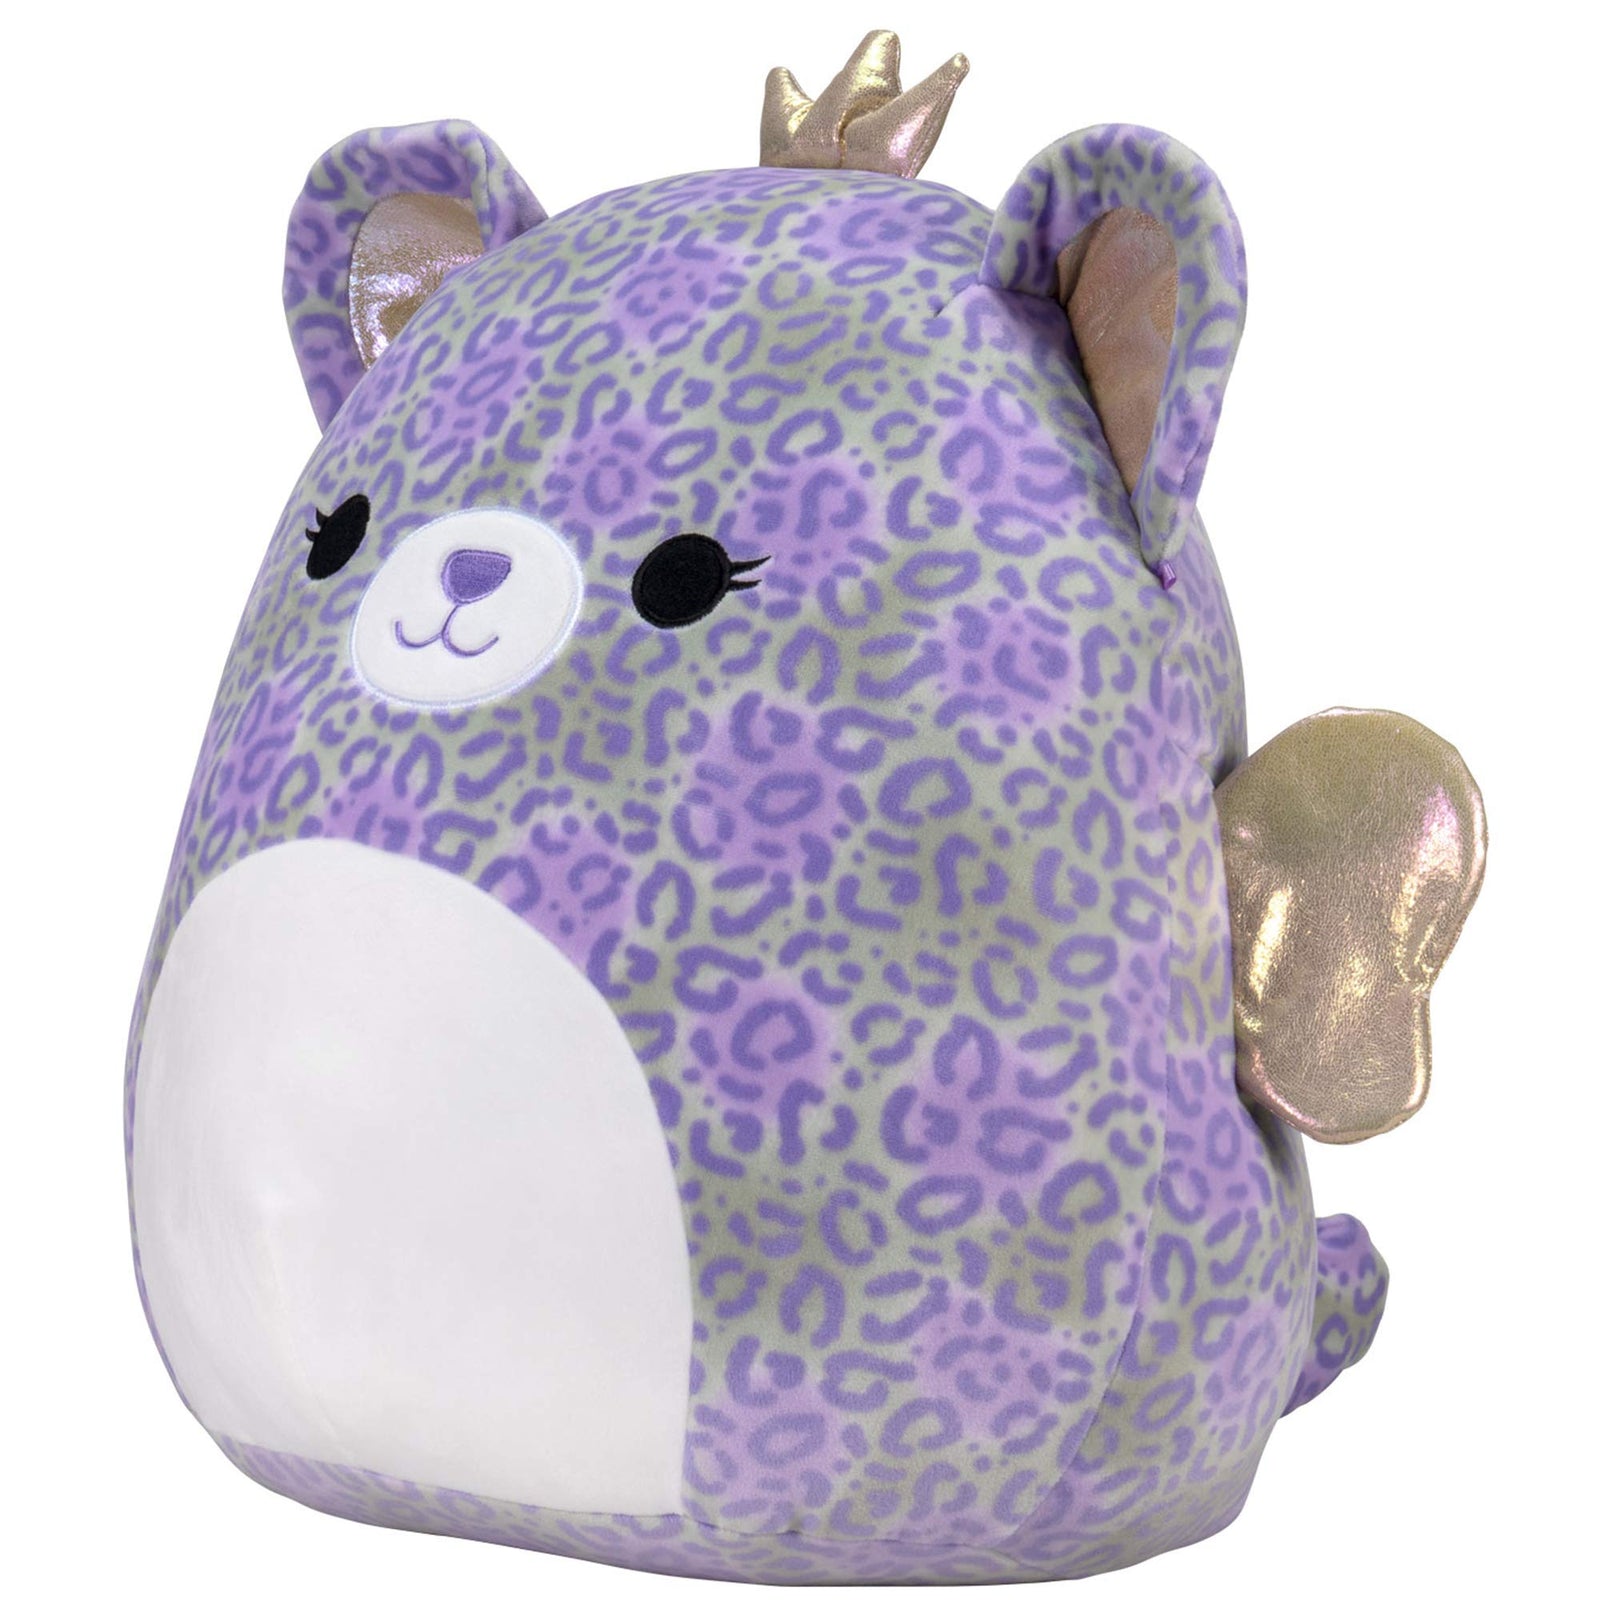 Squishmallow Official Kellytoy Plush 16" Ashlyn The Cheetah Fairy- Ultrasoft Stuffed Animal Plush Toy